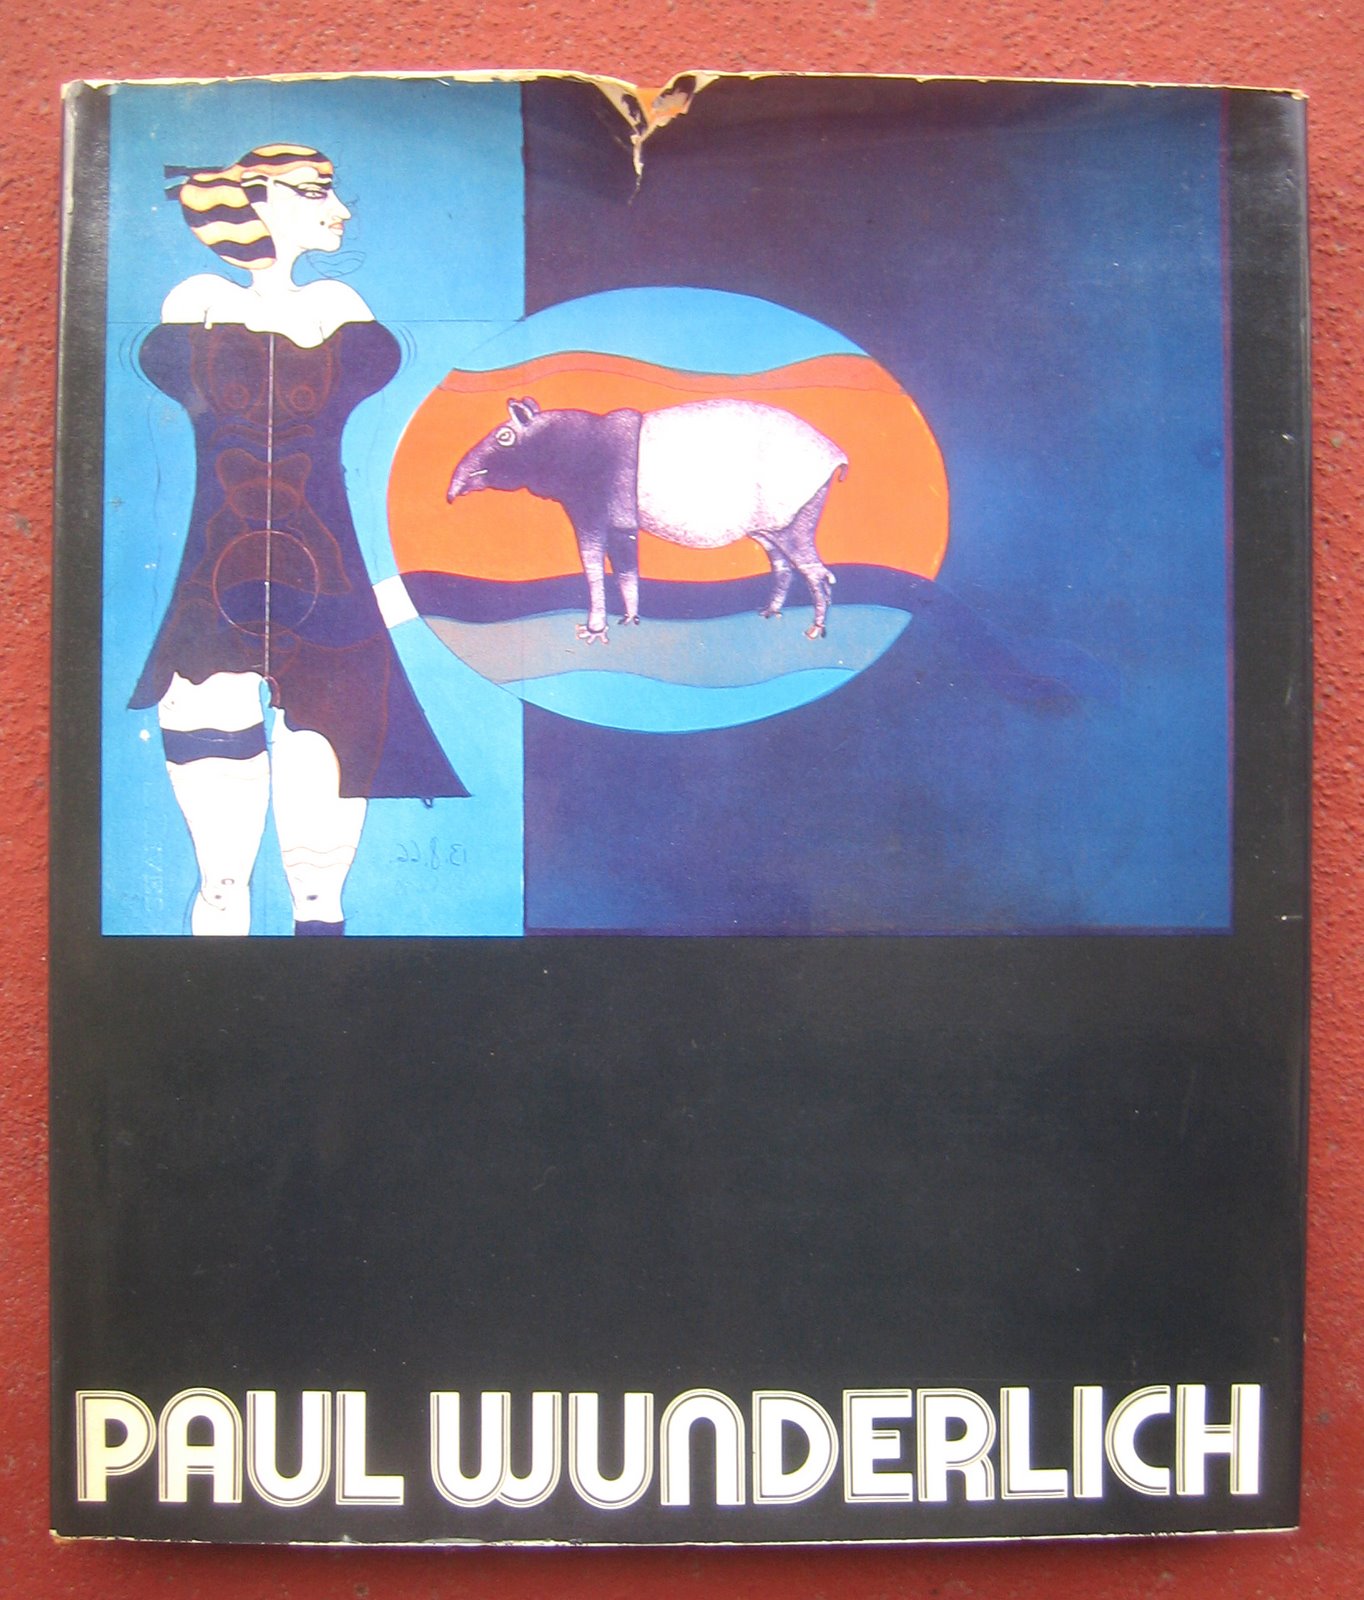 Paul Wunderlich